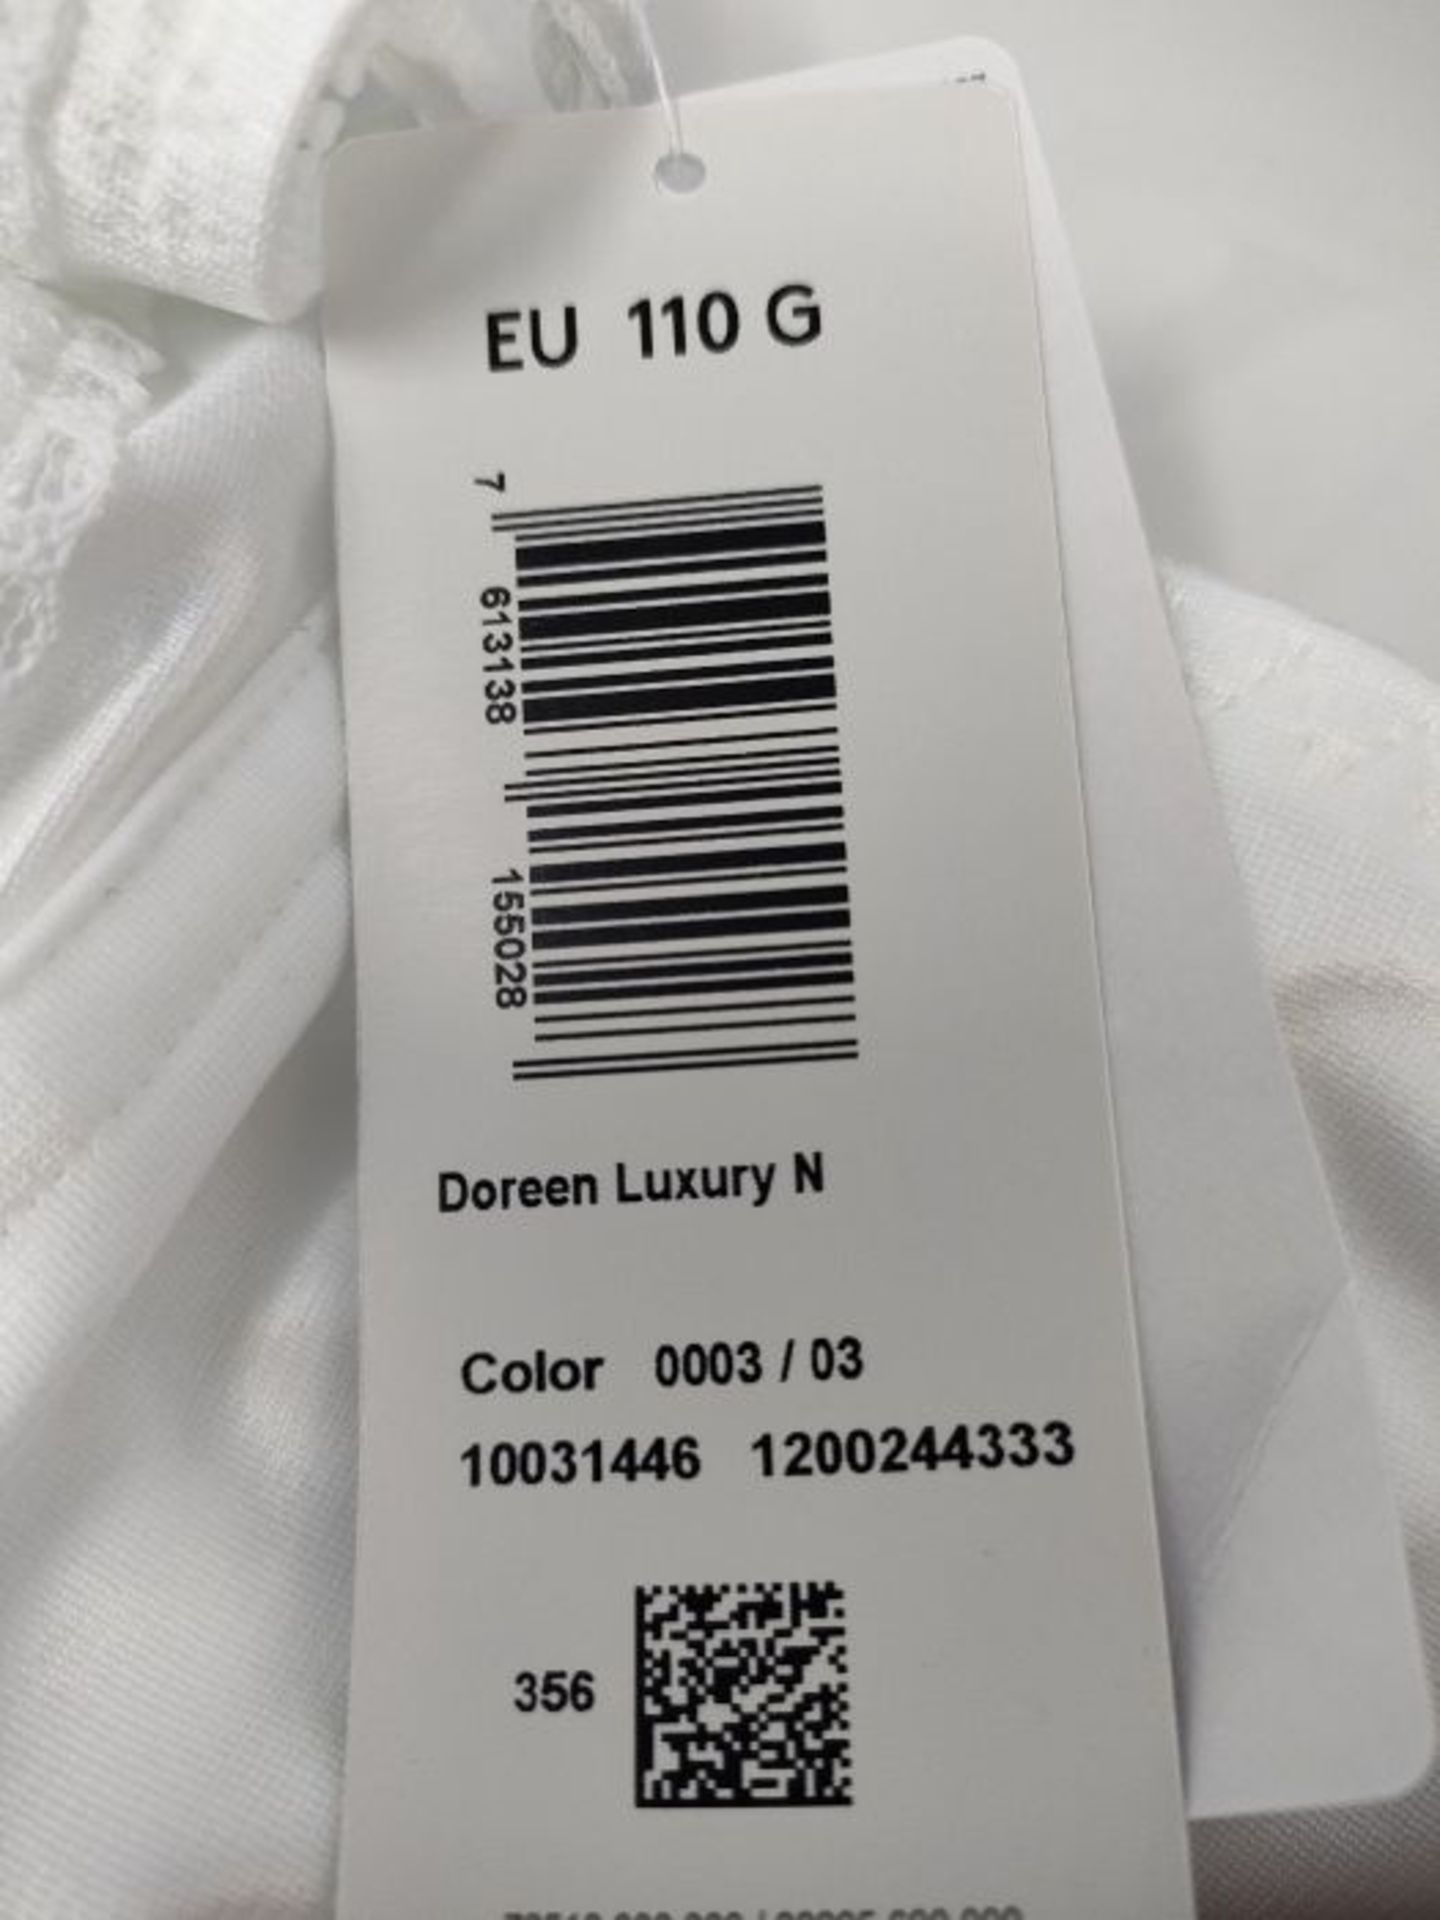 Triumph Doreen Luxury N Bra, White, 42G - Image 3 of 3